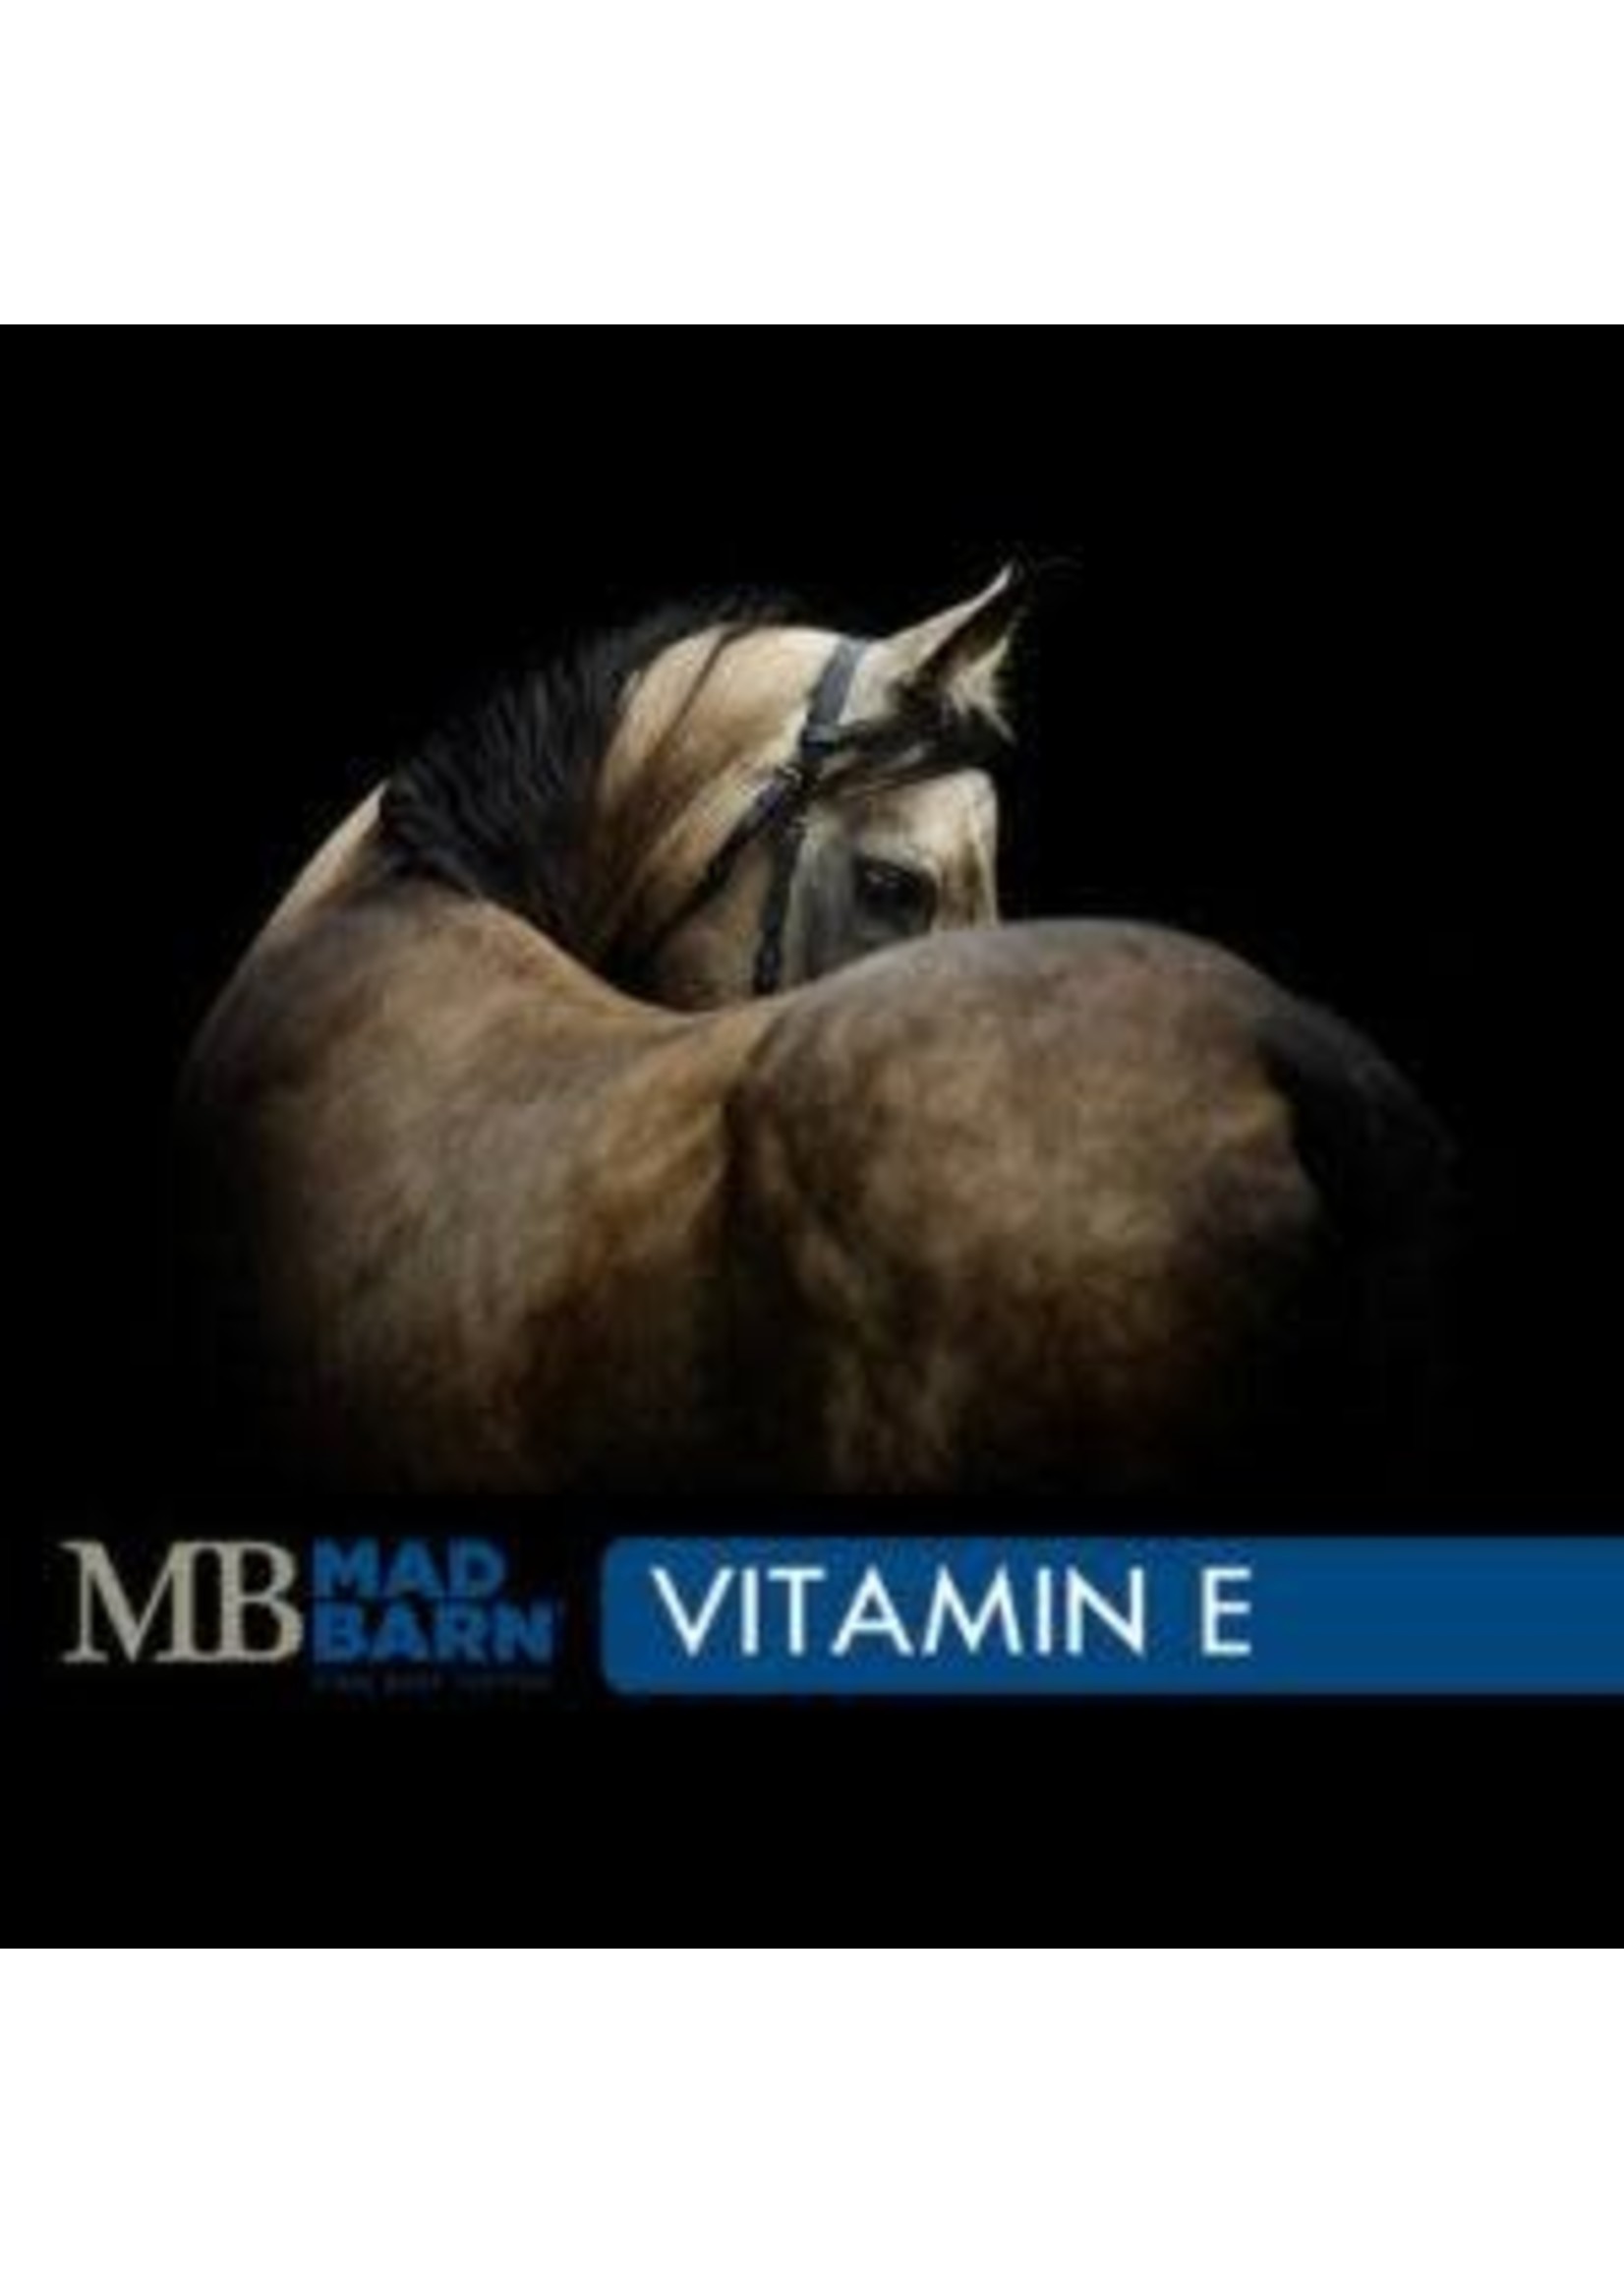 Mad Barn MB vitamine E 1 kg